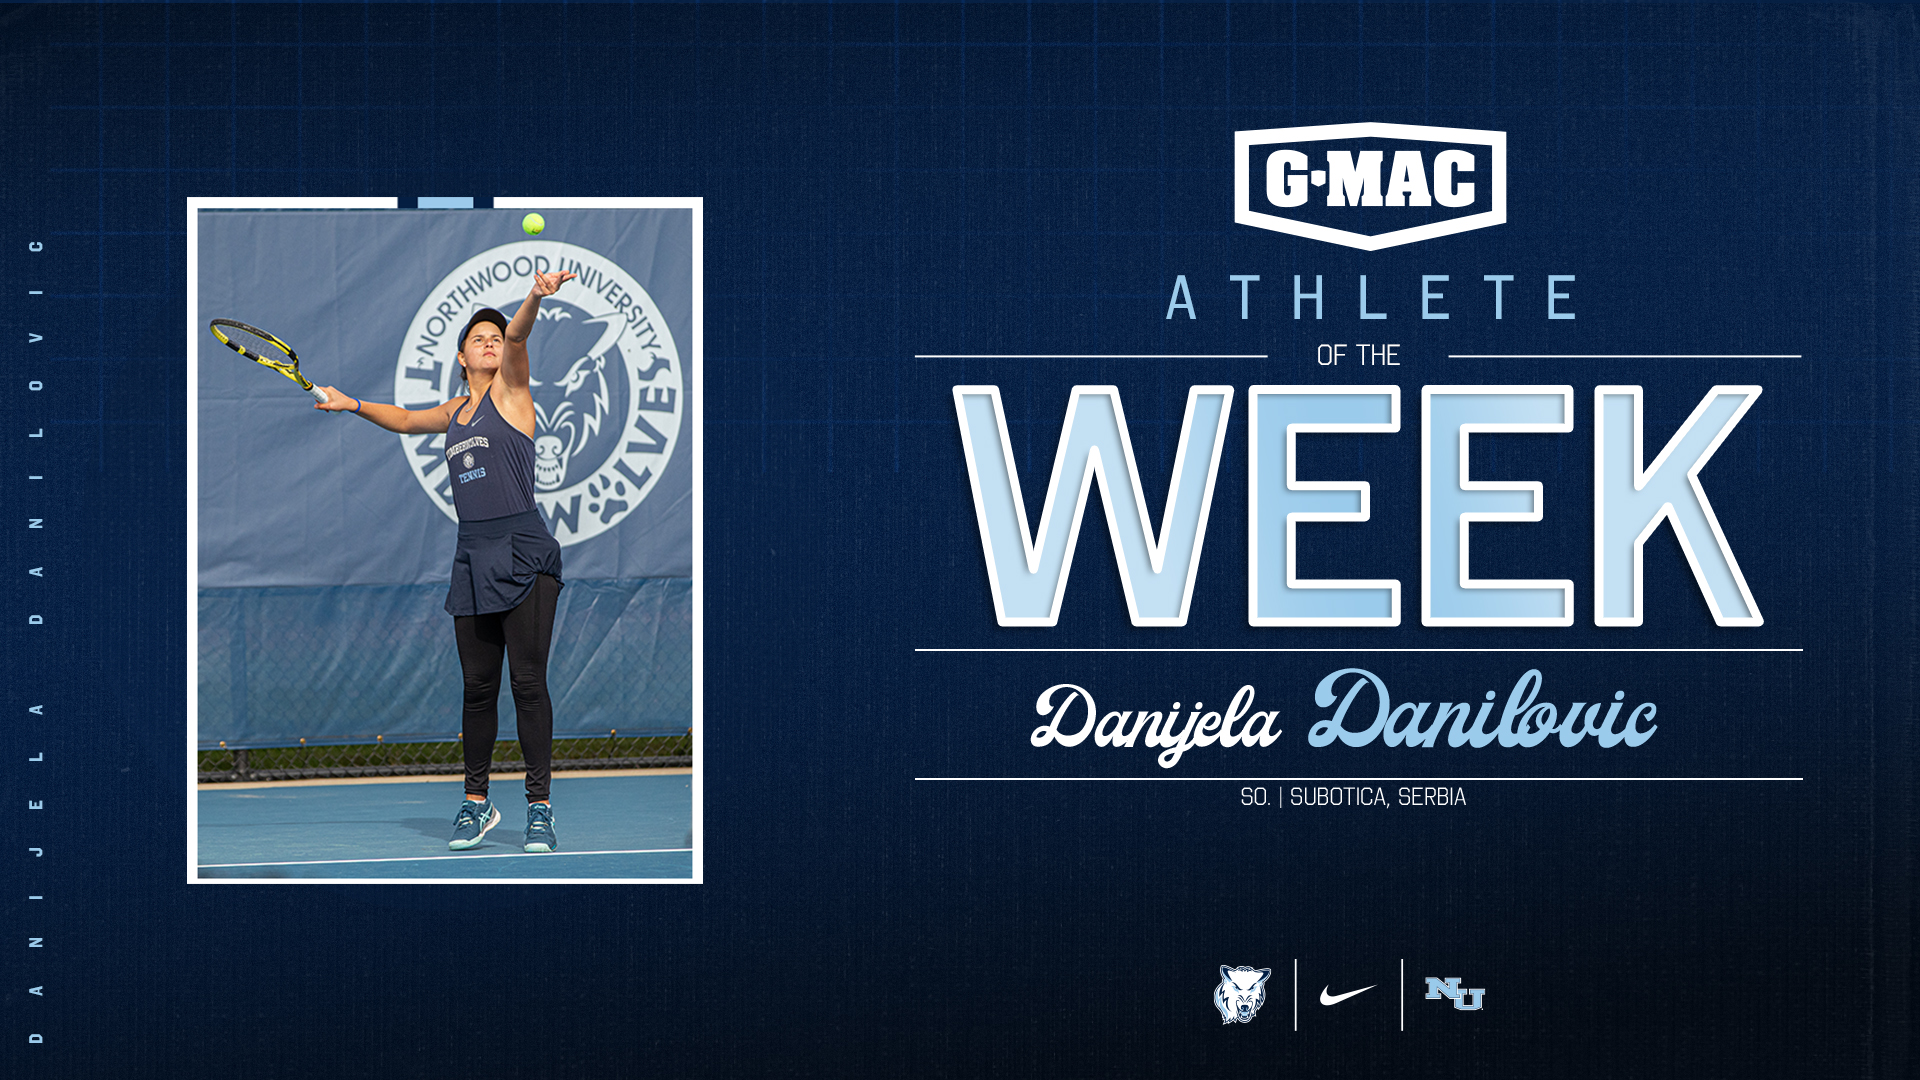 Danijela Danilovic Secures Her First Career Athlete of the Week